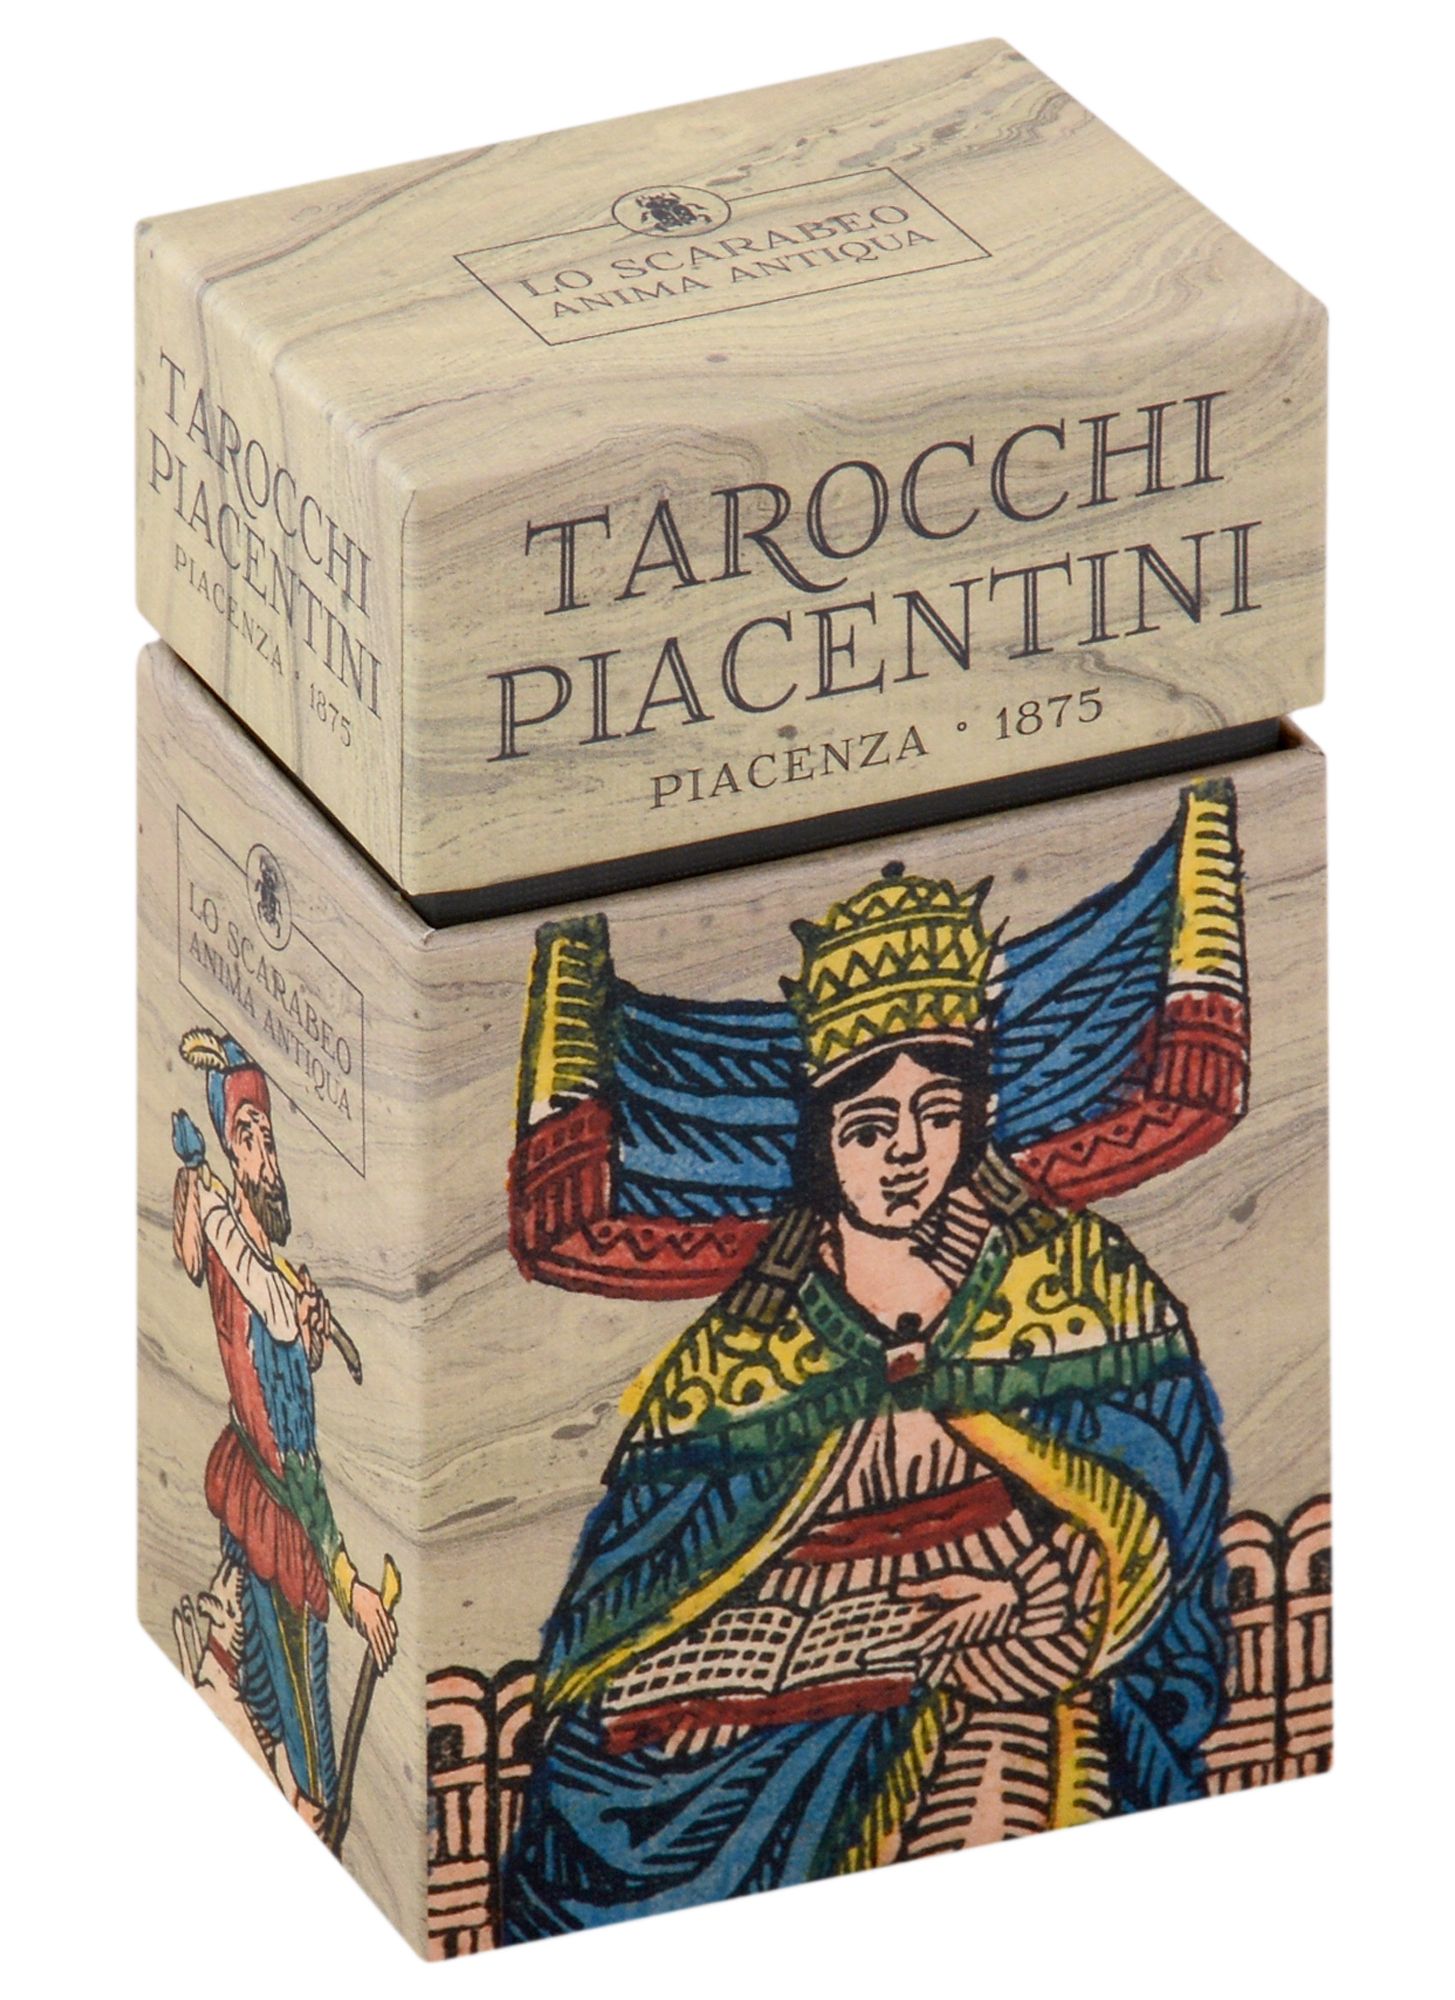 alligo p tarot of new vision 78 cards with instructions Alligo P. Tarocchi Piacentini (78 Cards with Instructions)